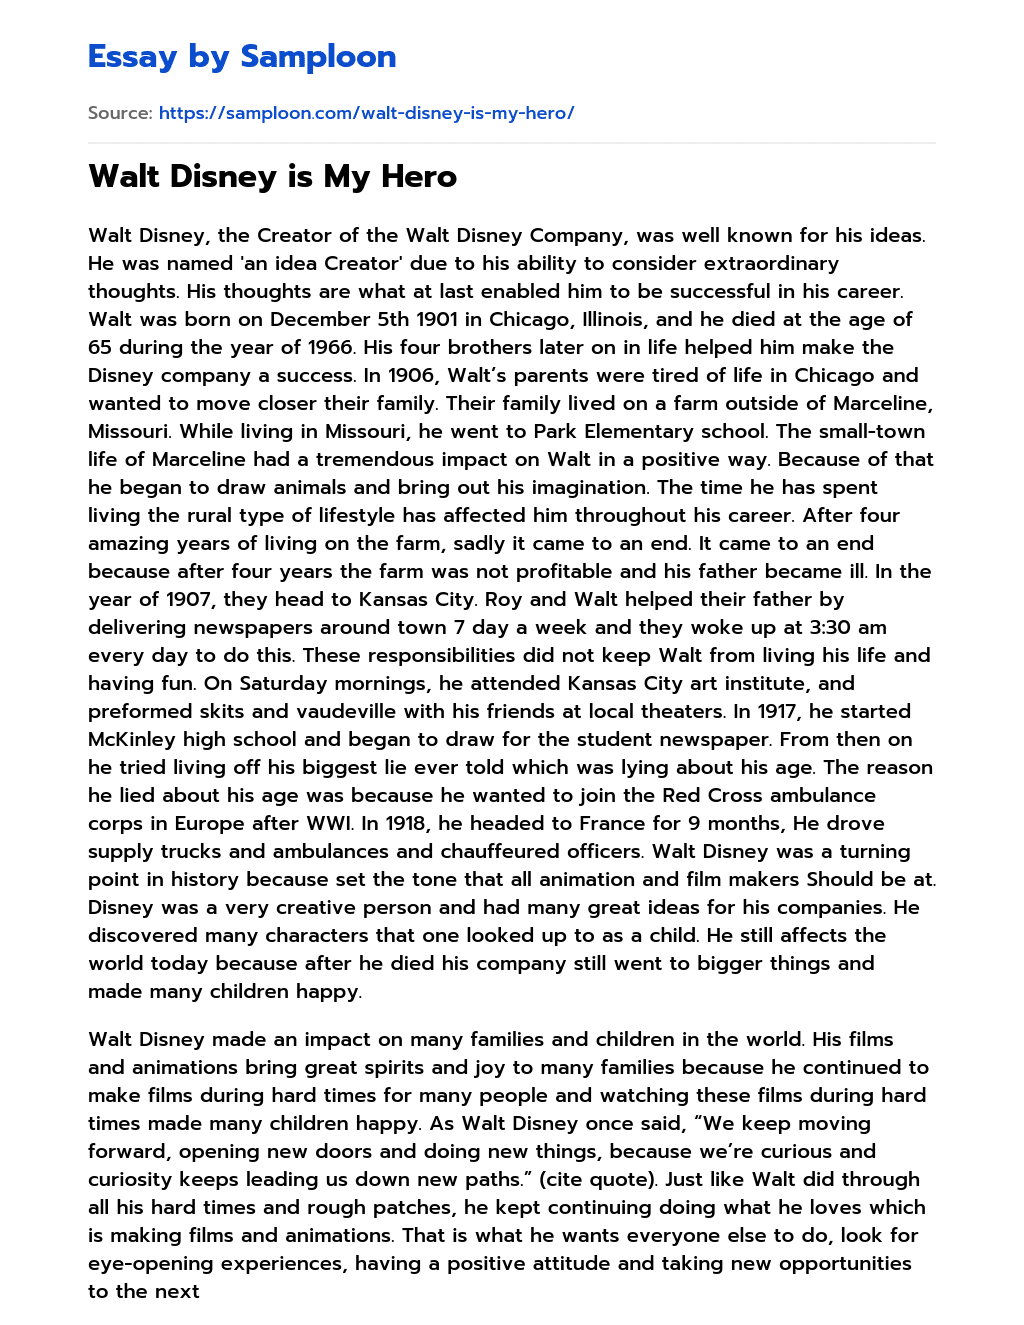 Walt Disney is My Hero essay